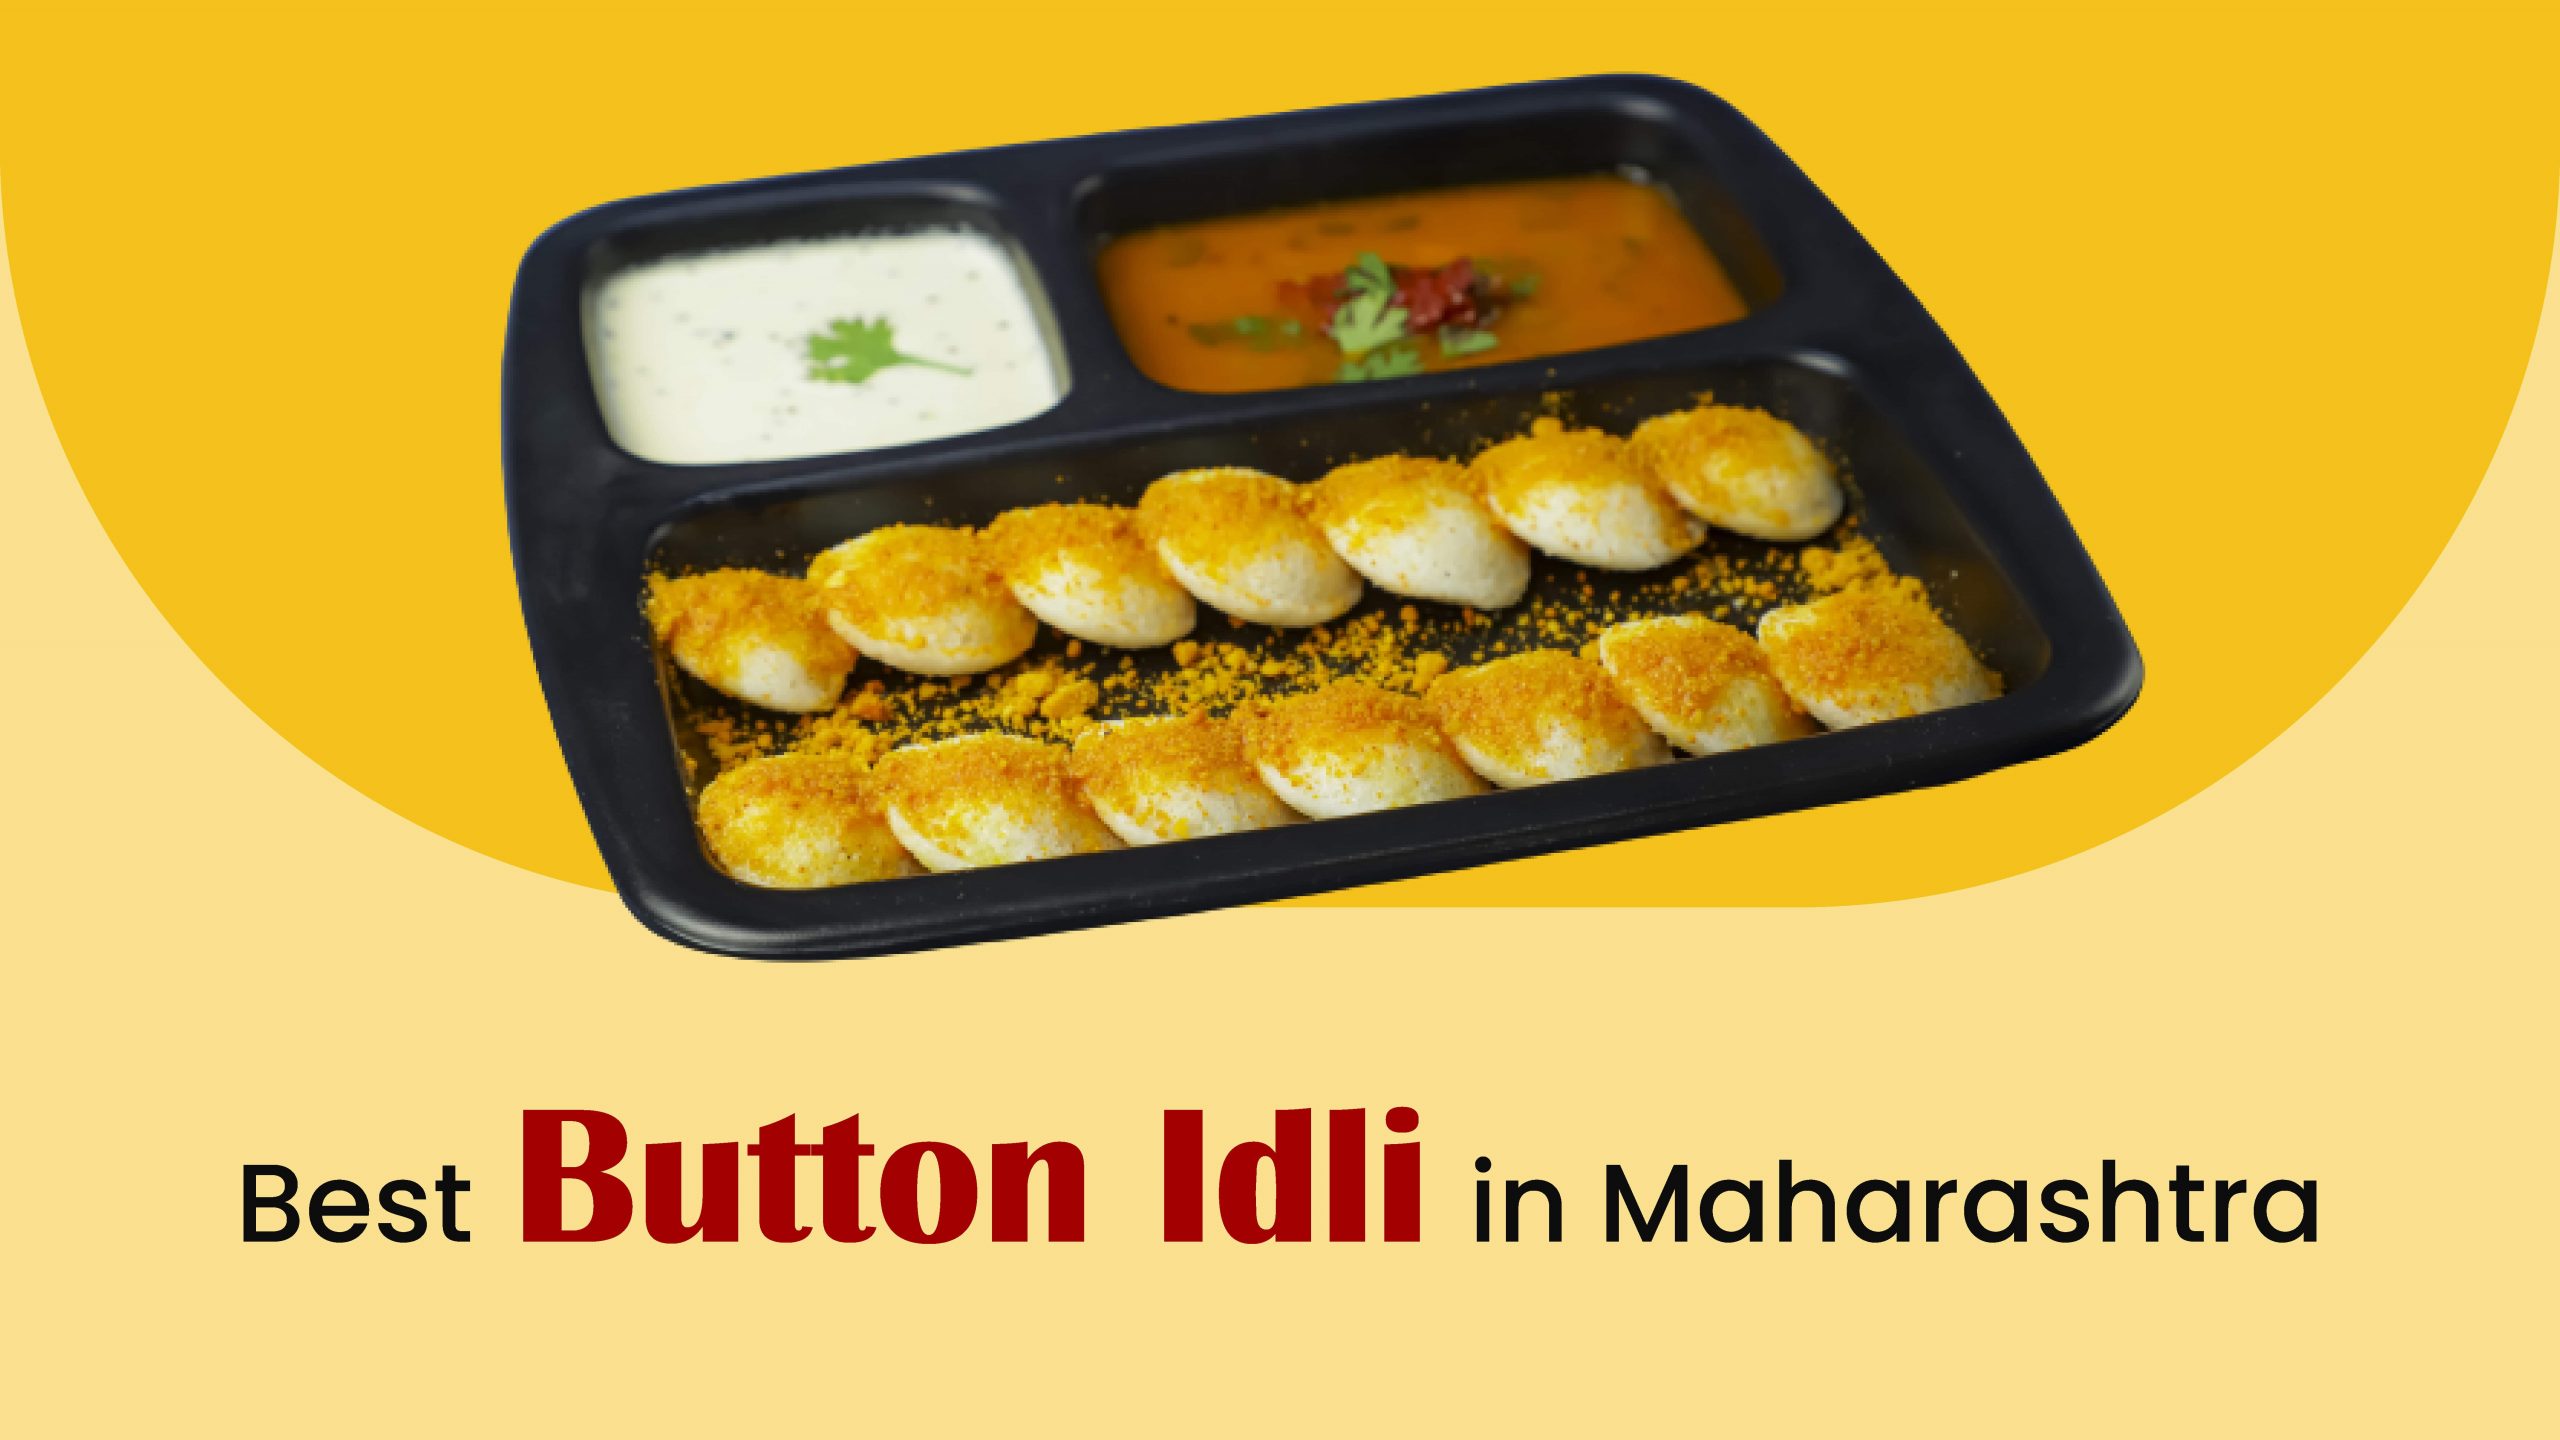 Best button idli in Maharashtra